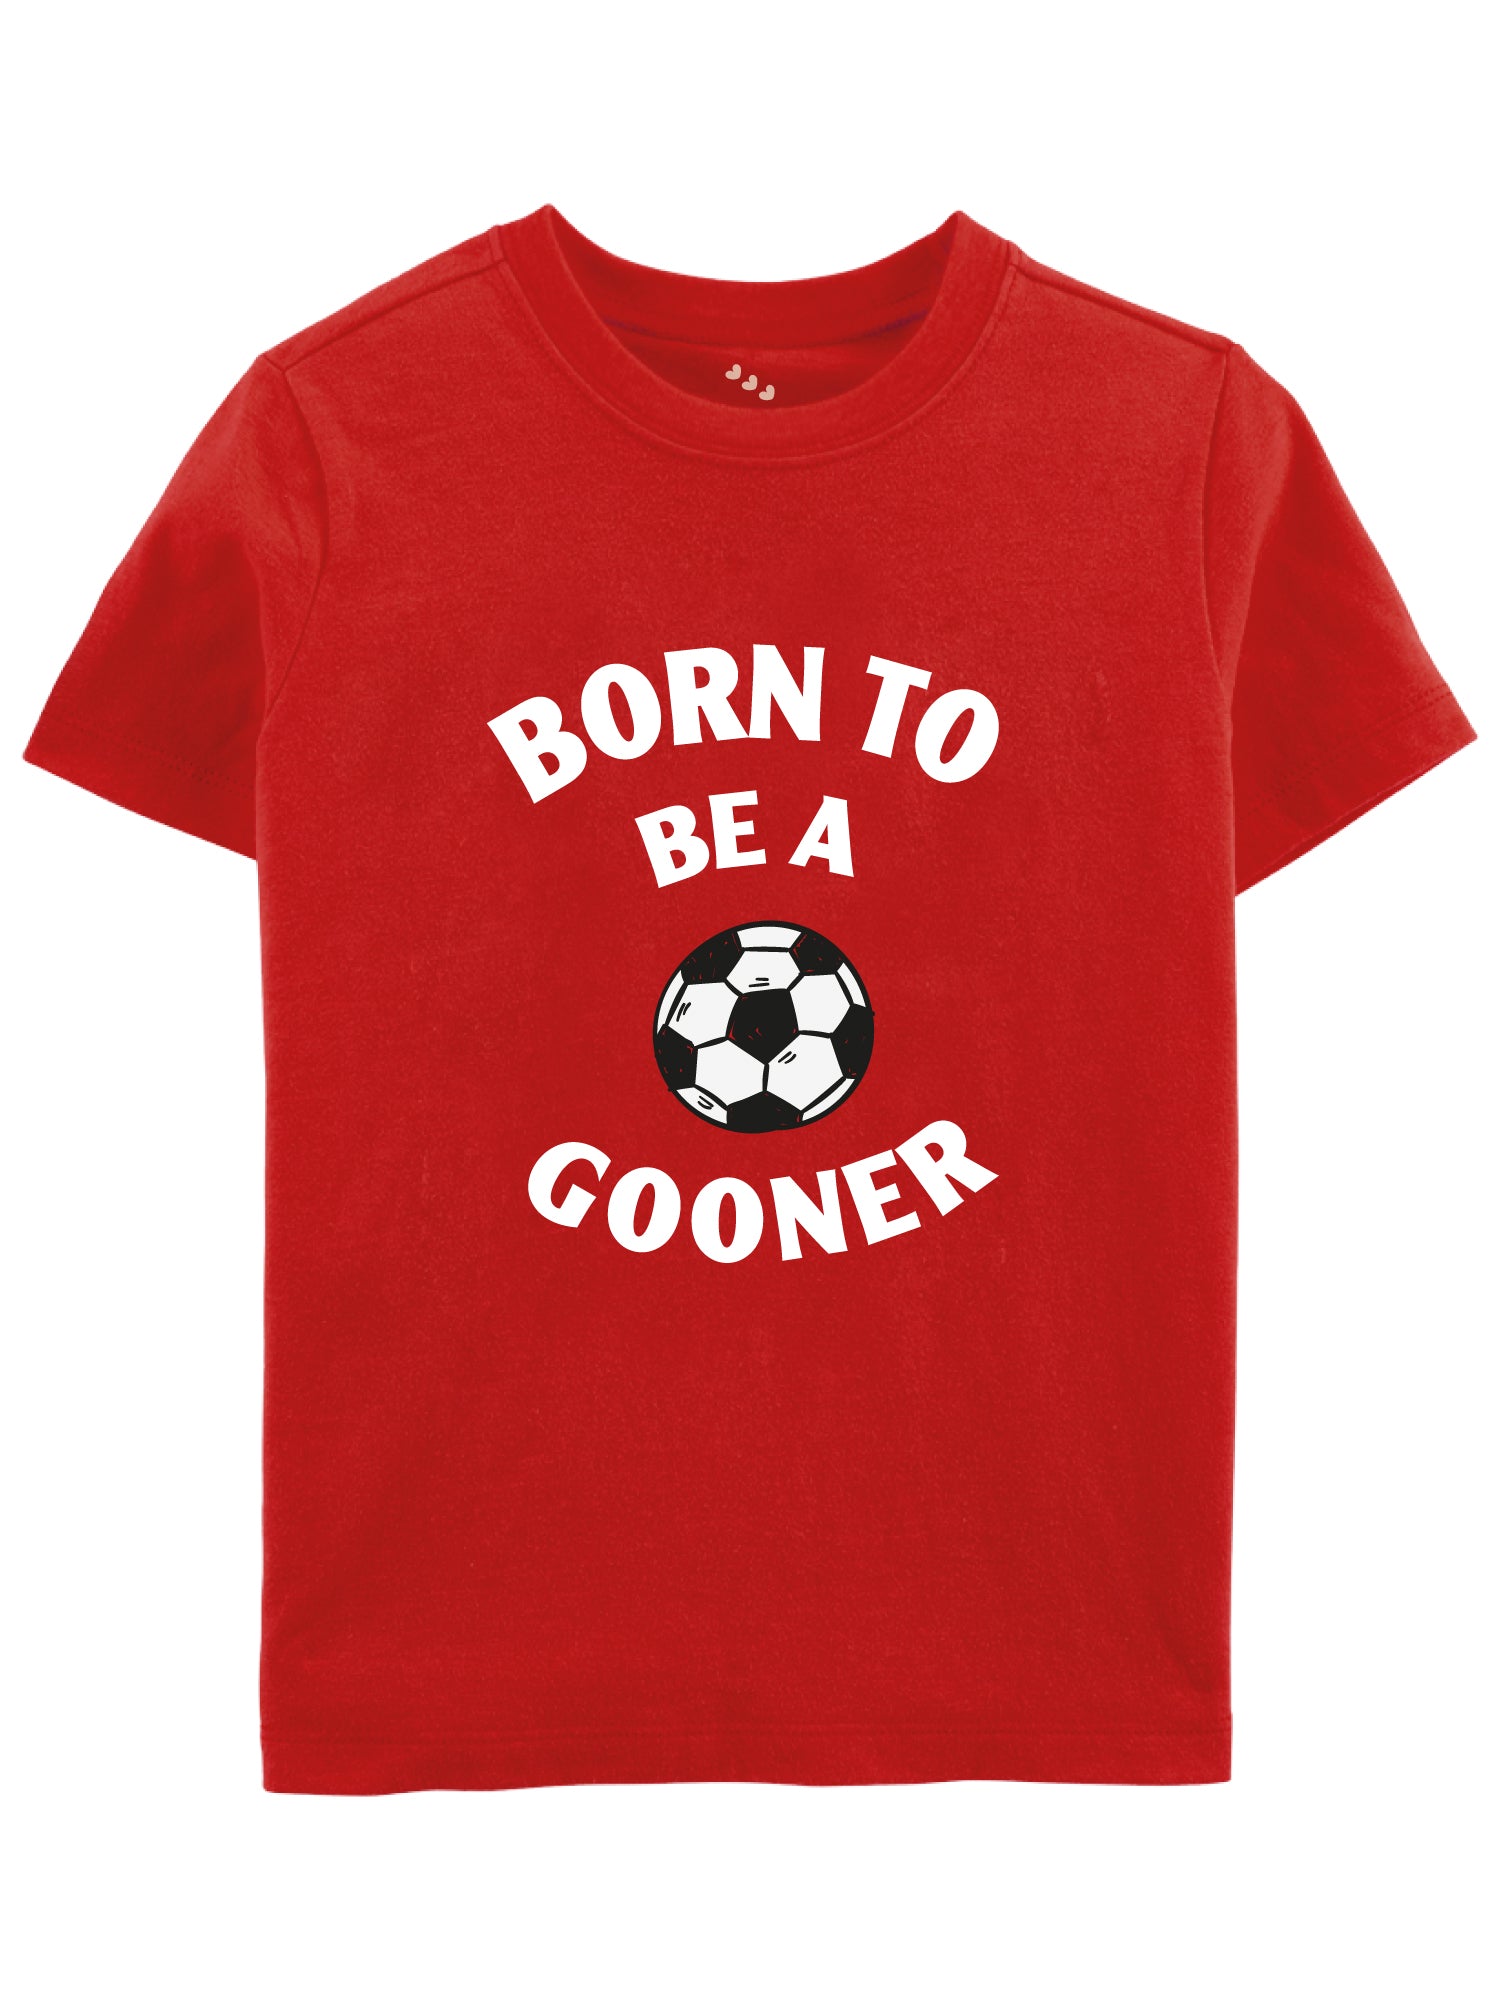 Born to be a Gooner - Tee